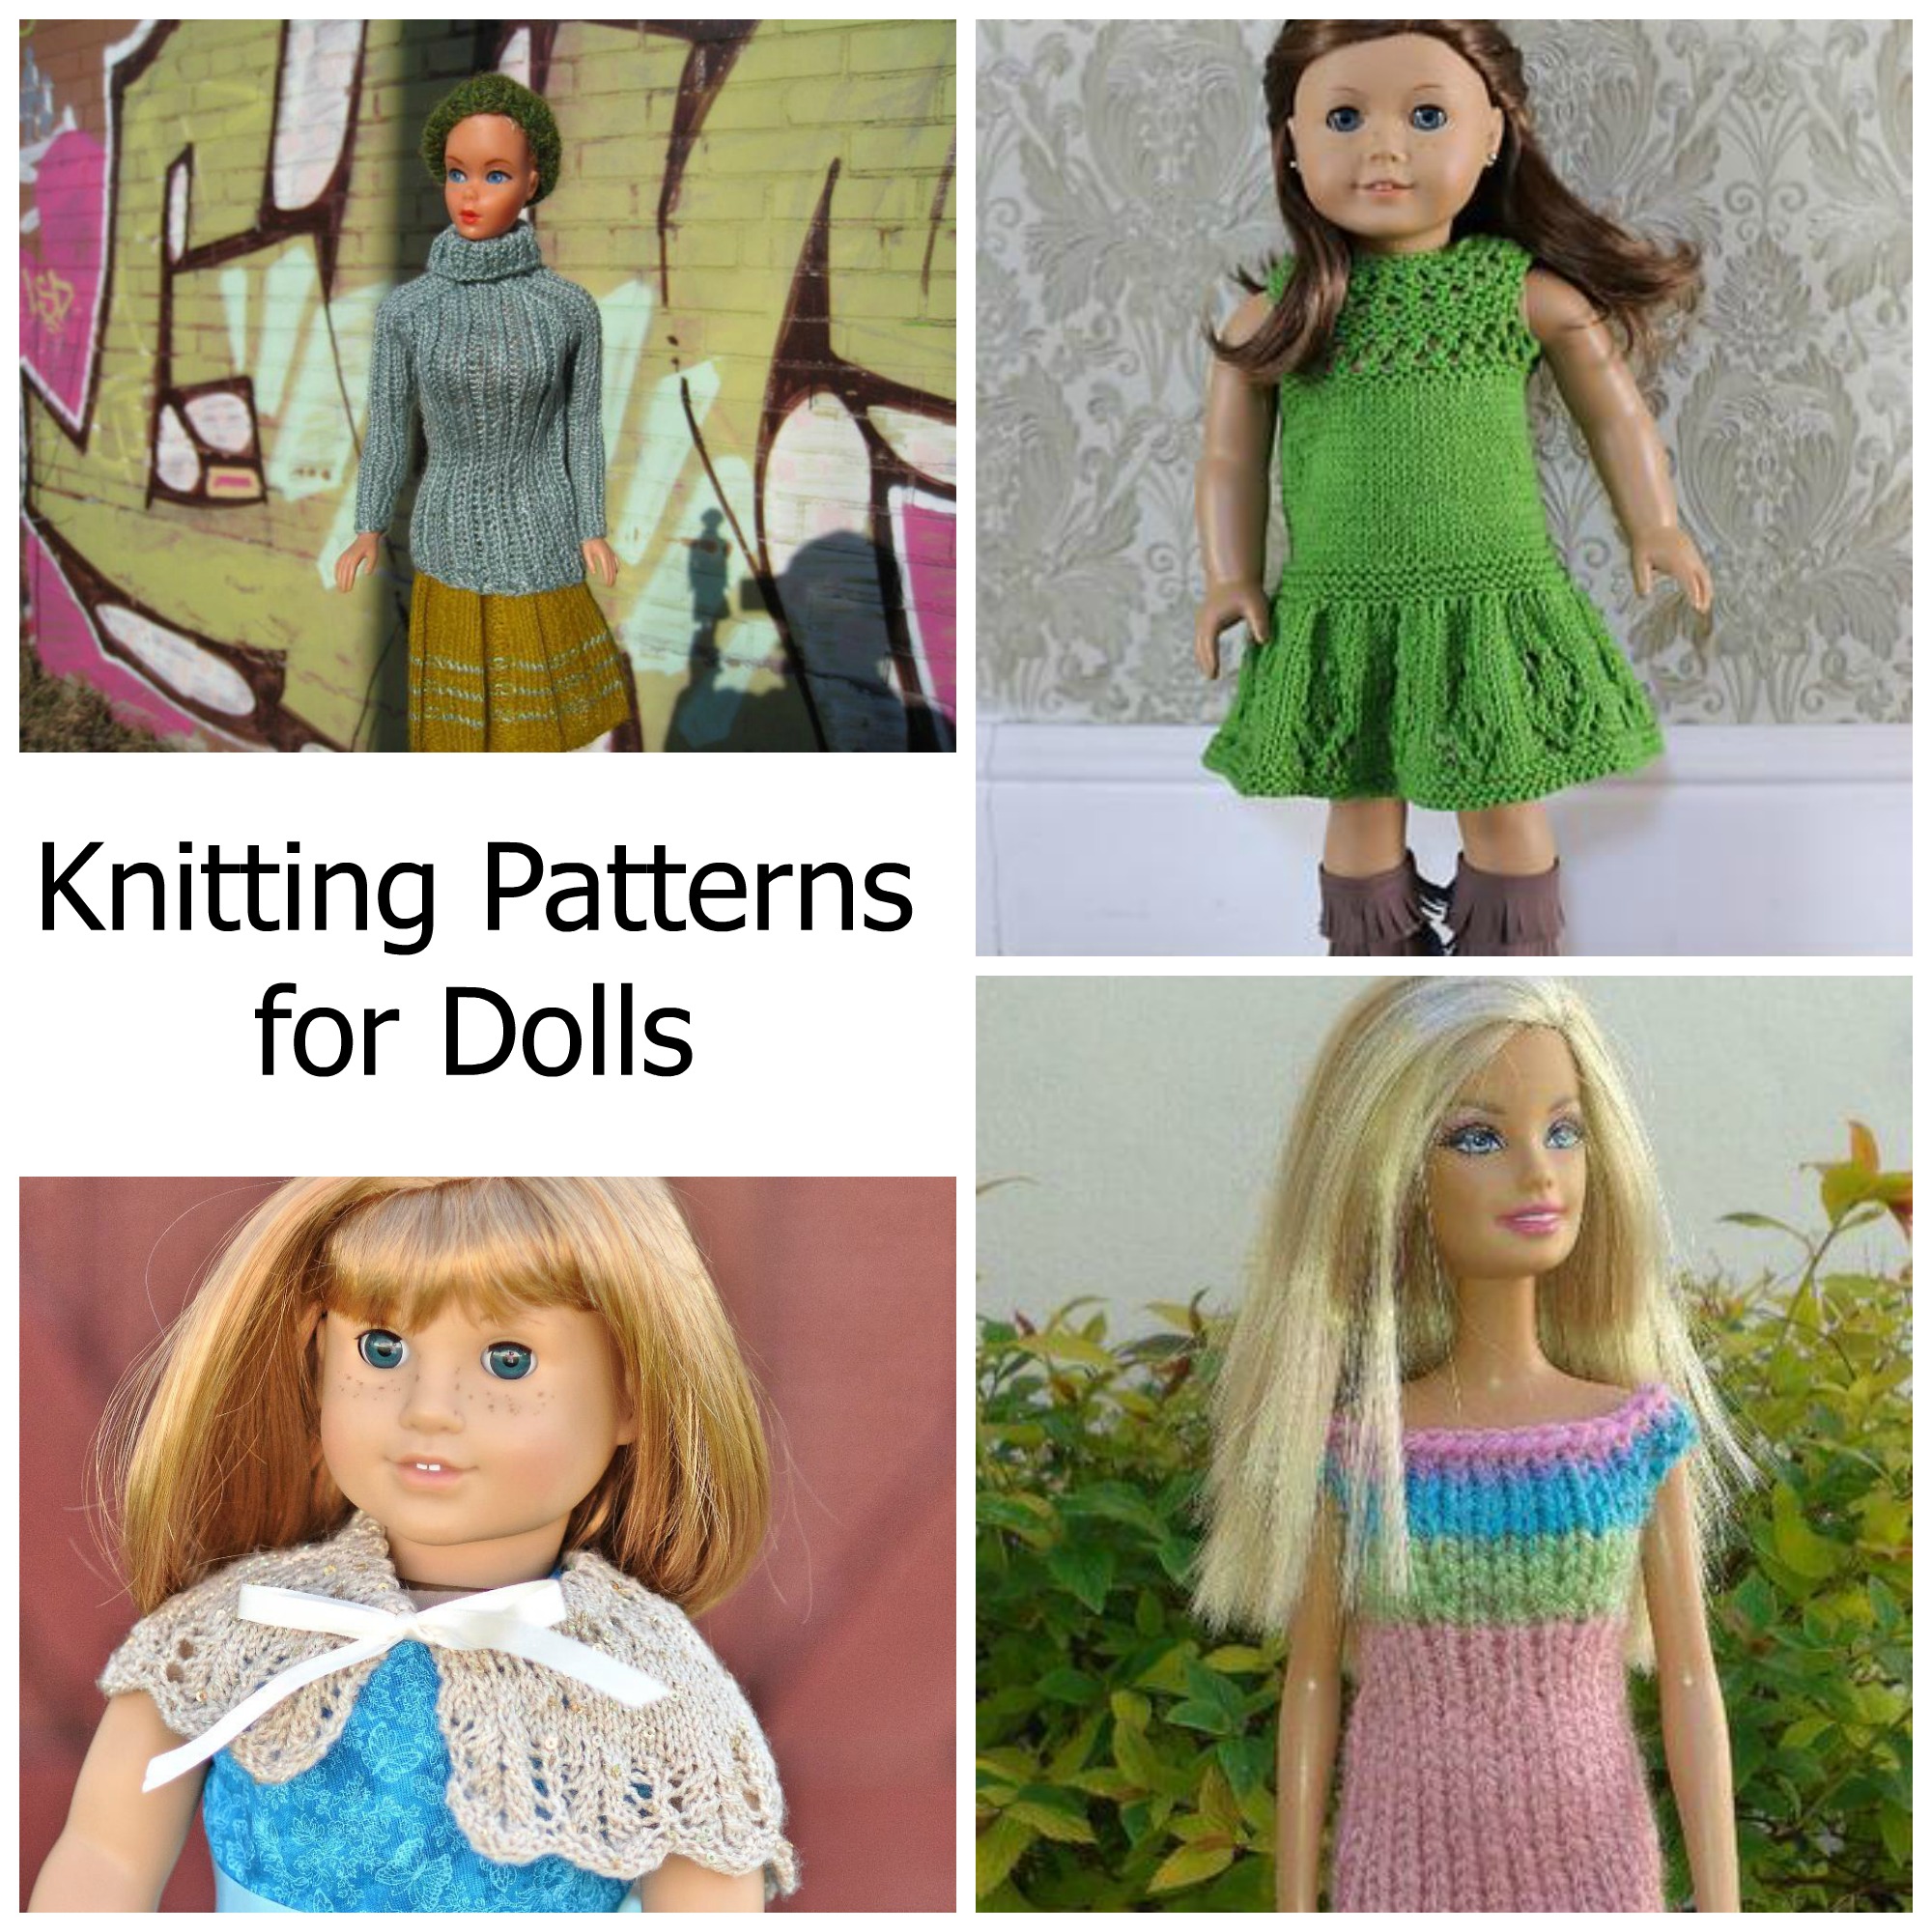 Knitting Patterns for Dolls